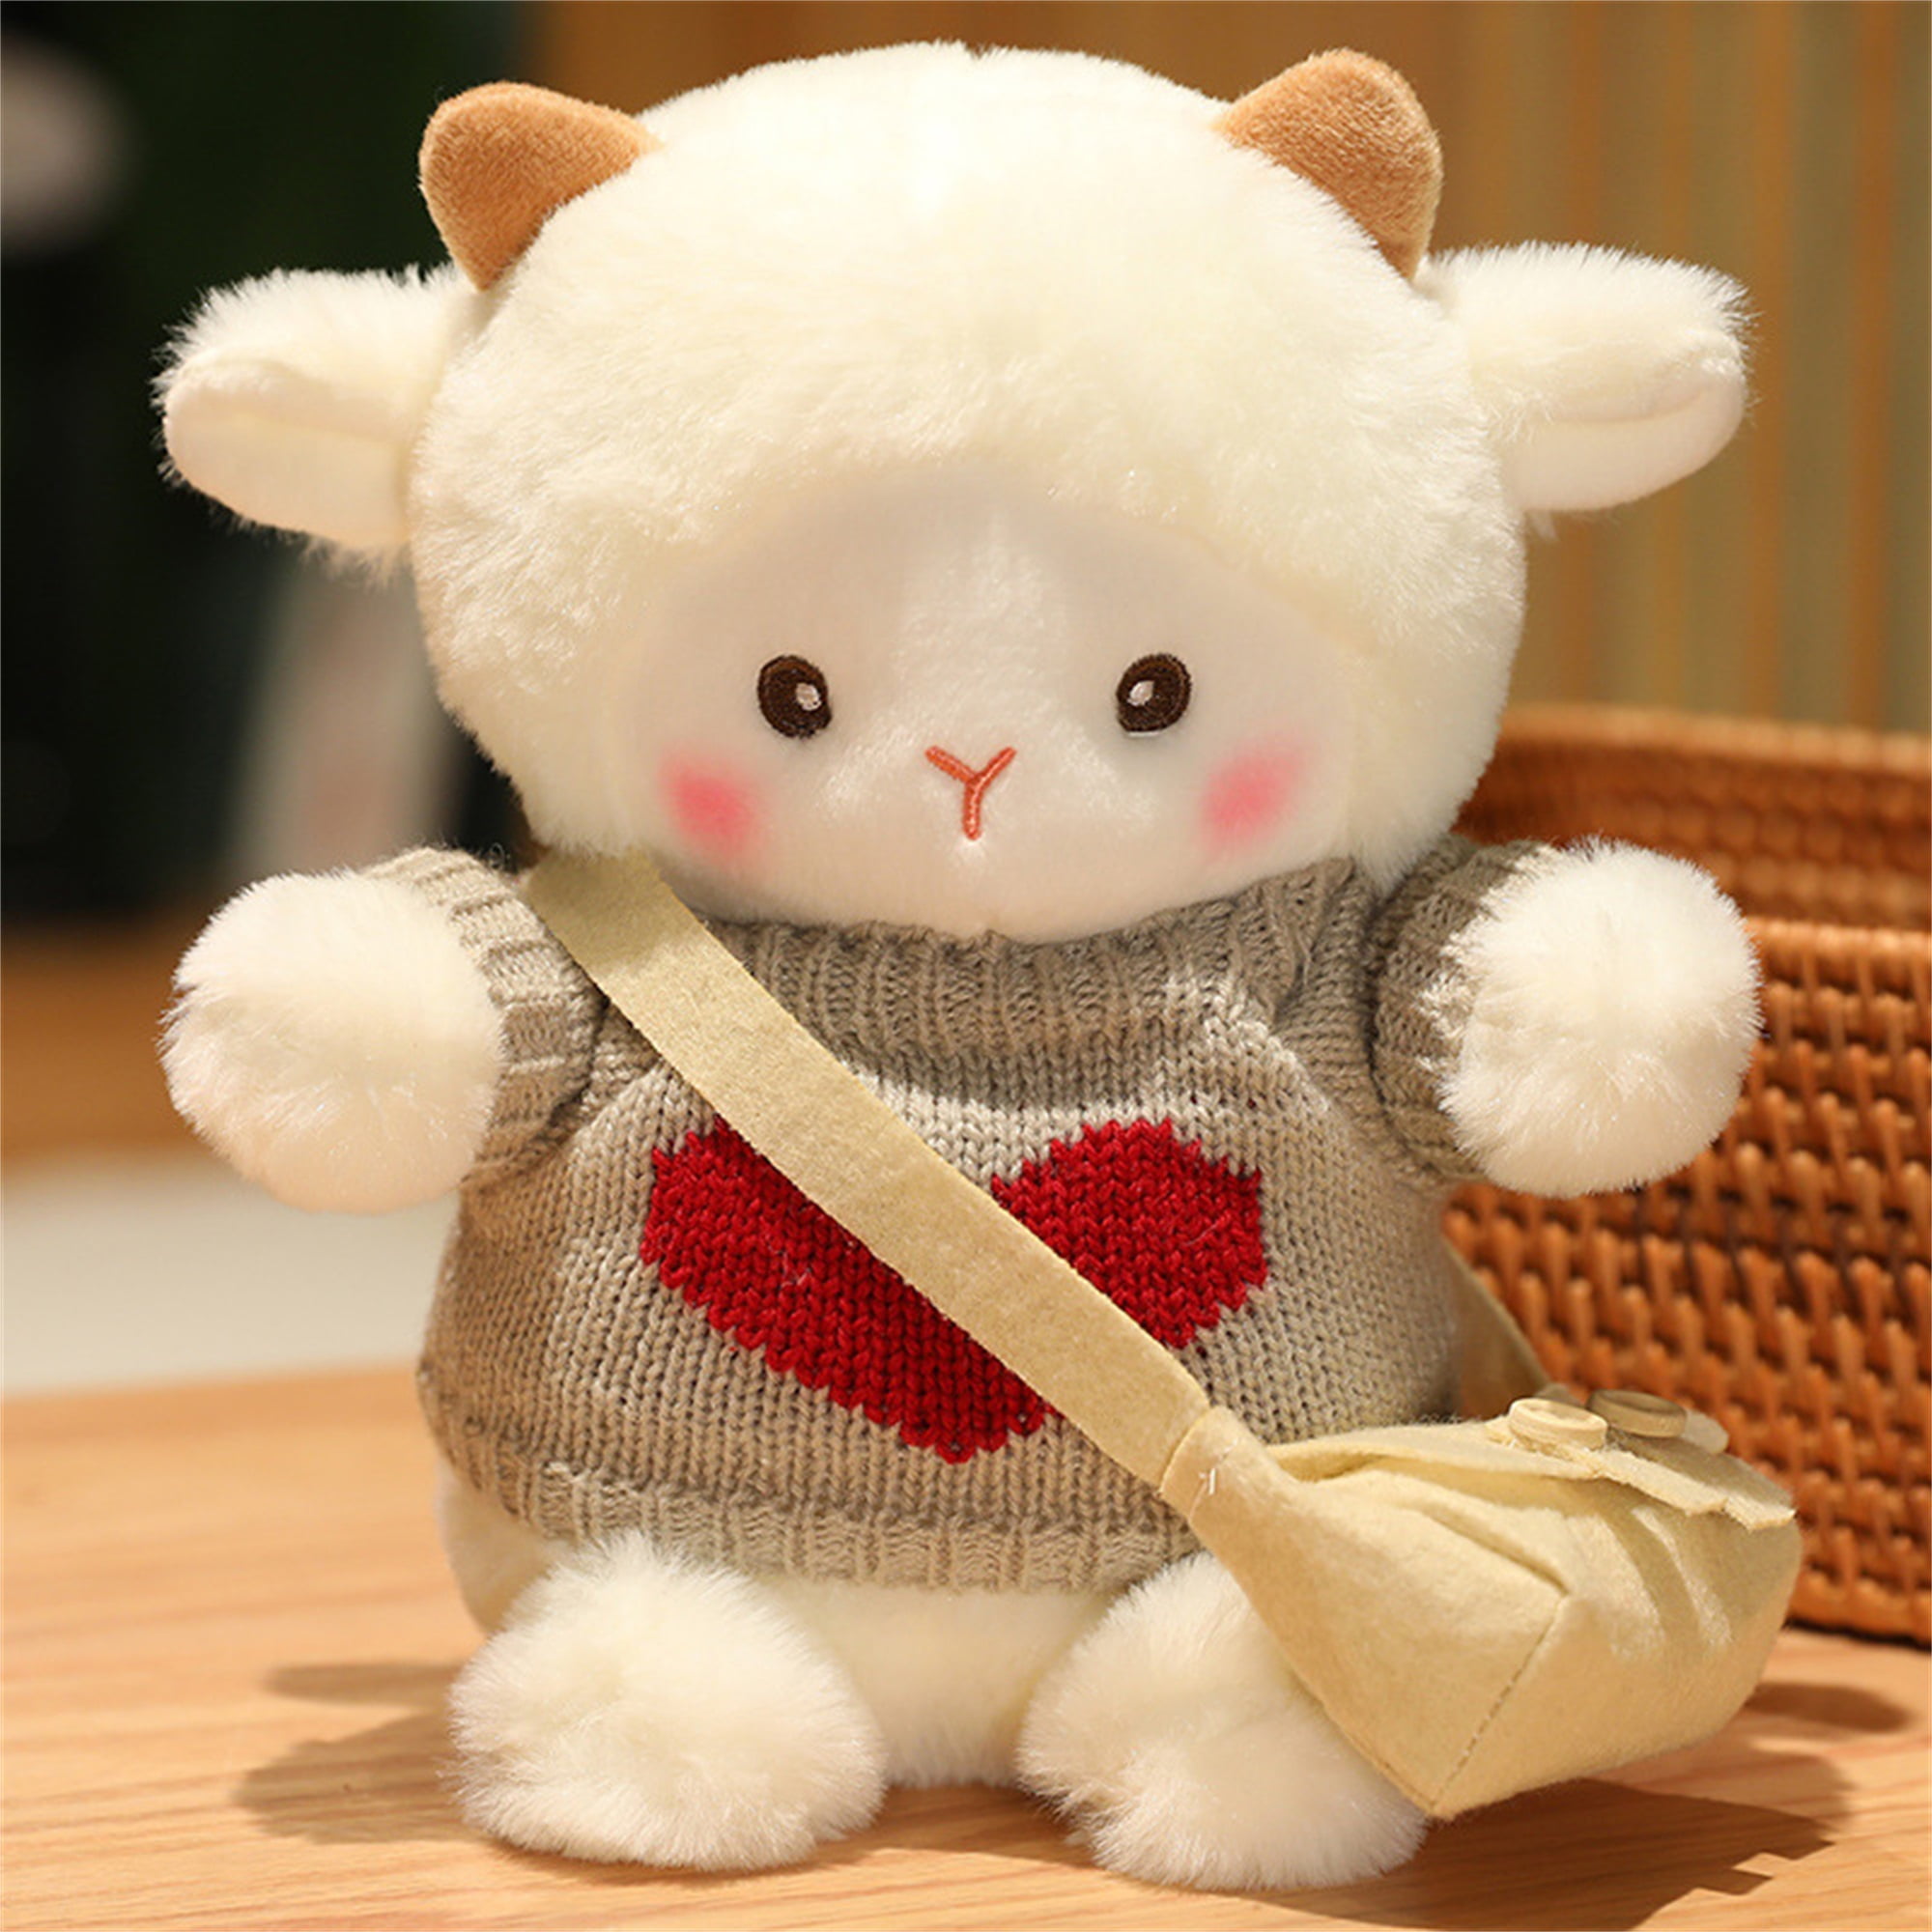 23cm Little Sheep Soft Plush Toys Animal Stuffed Baby Kids Doll Toy Home Decor